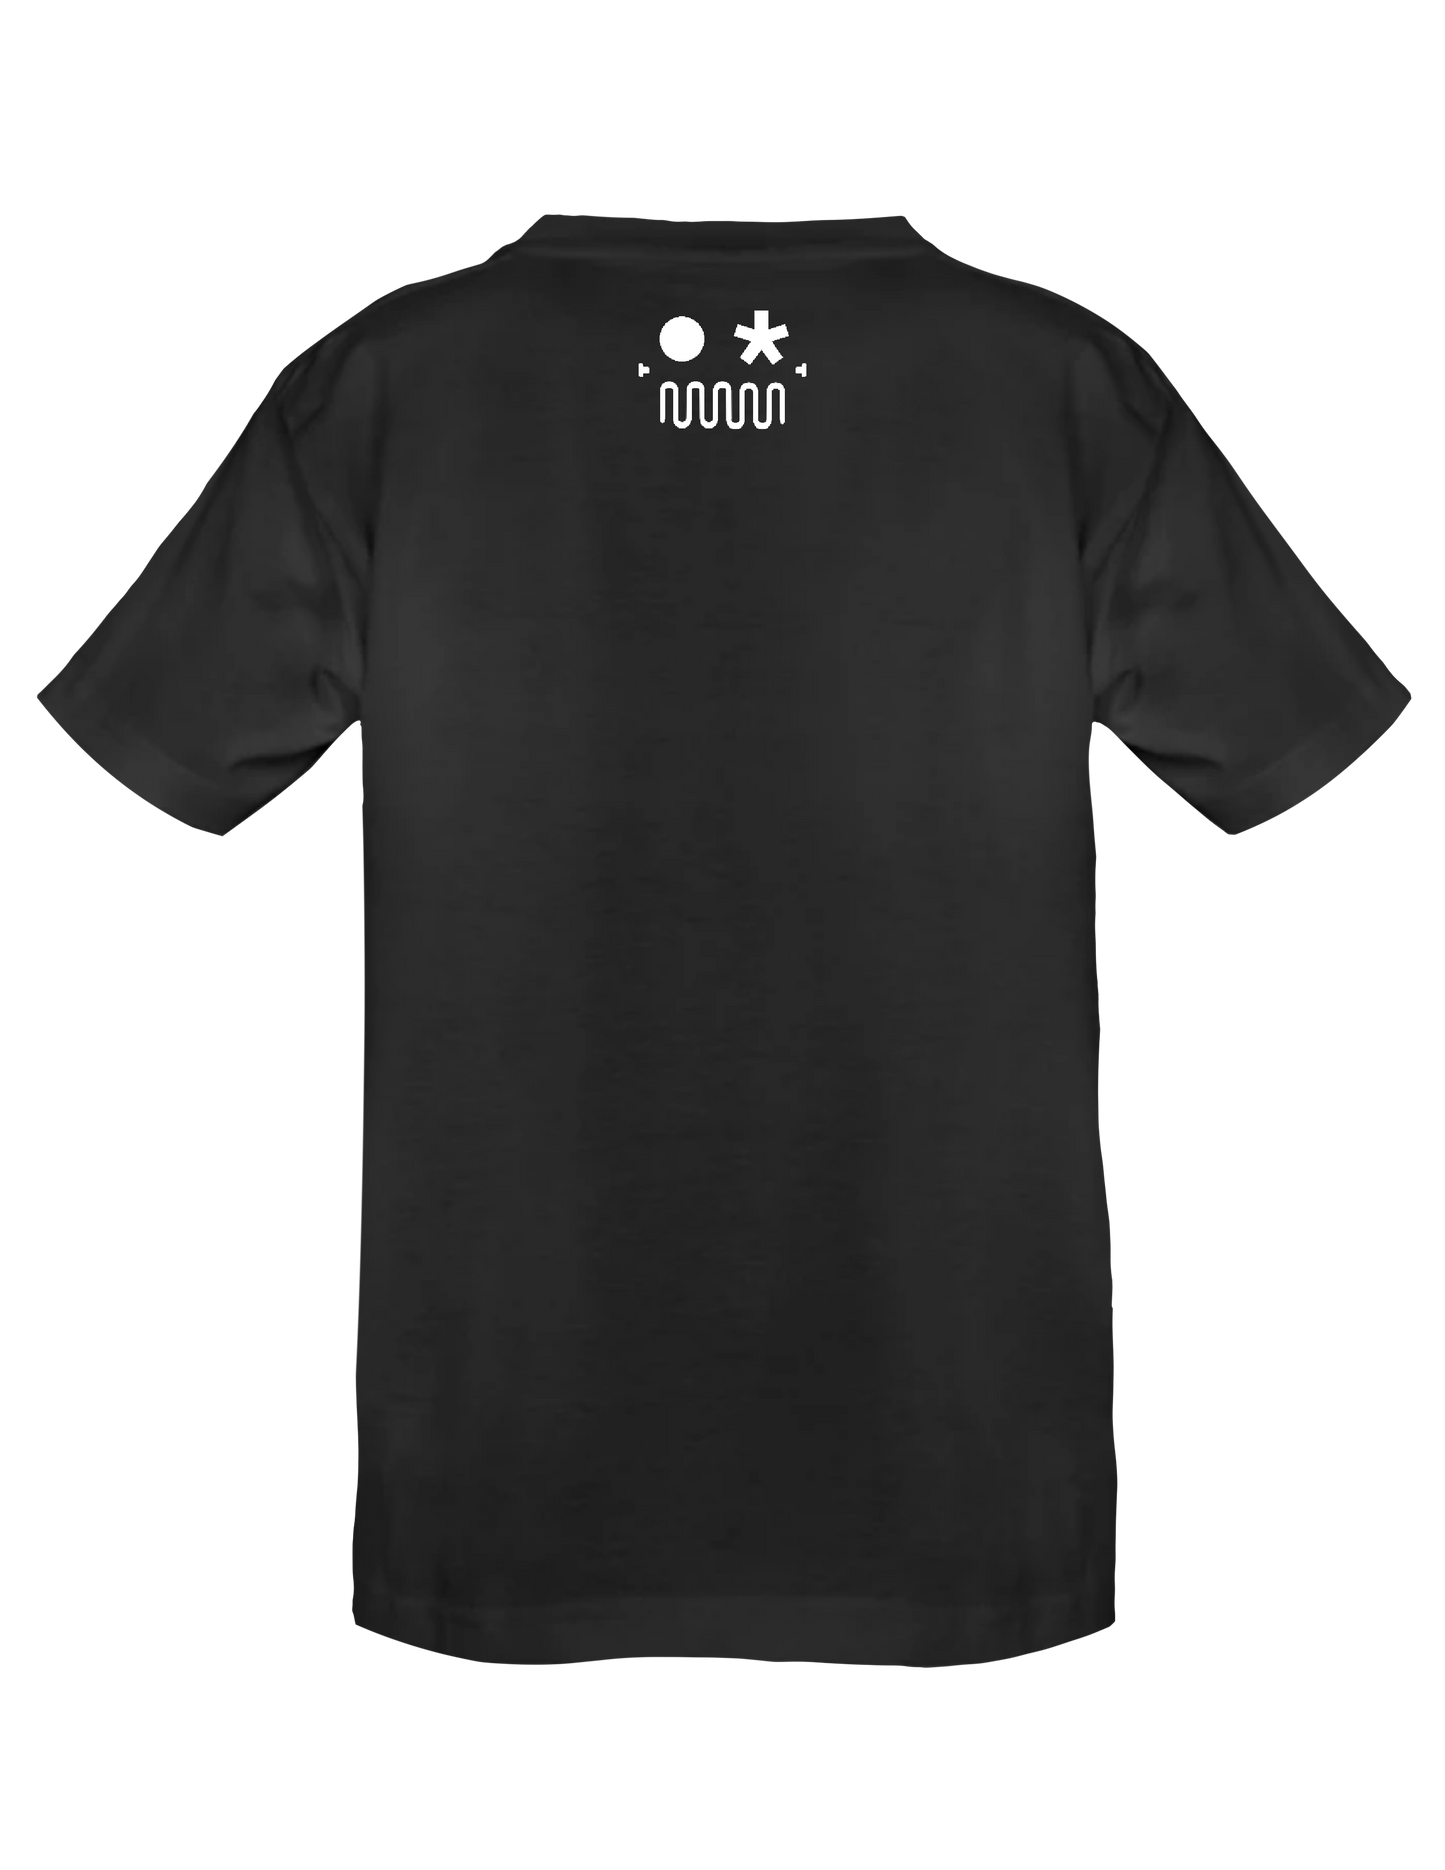 MR. MORALE* (Black) - T-Shirt